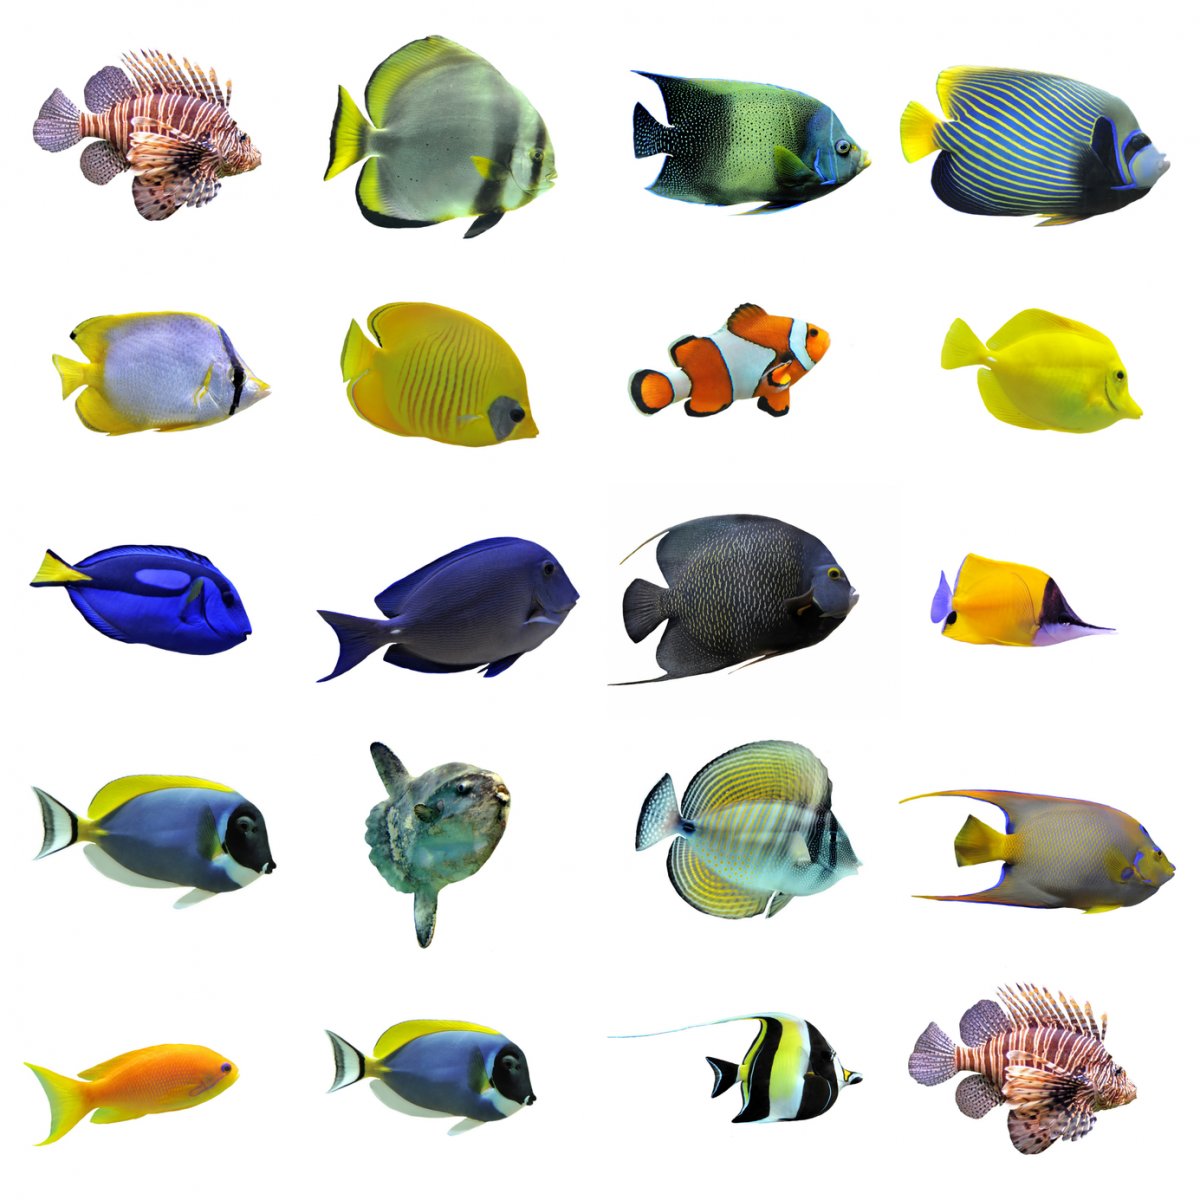 group-of-fishes-000015974089_Medium.jpg